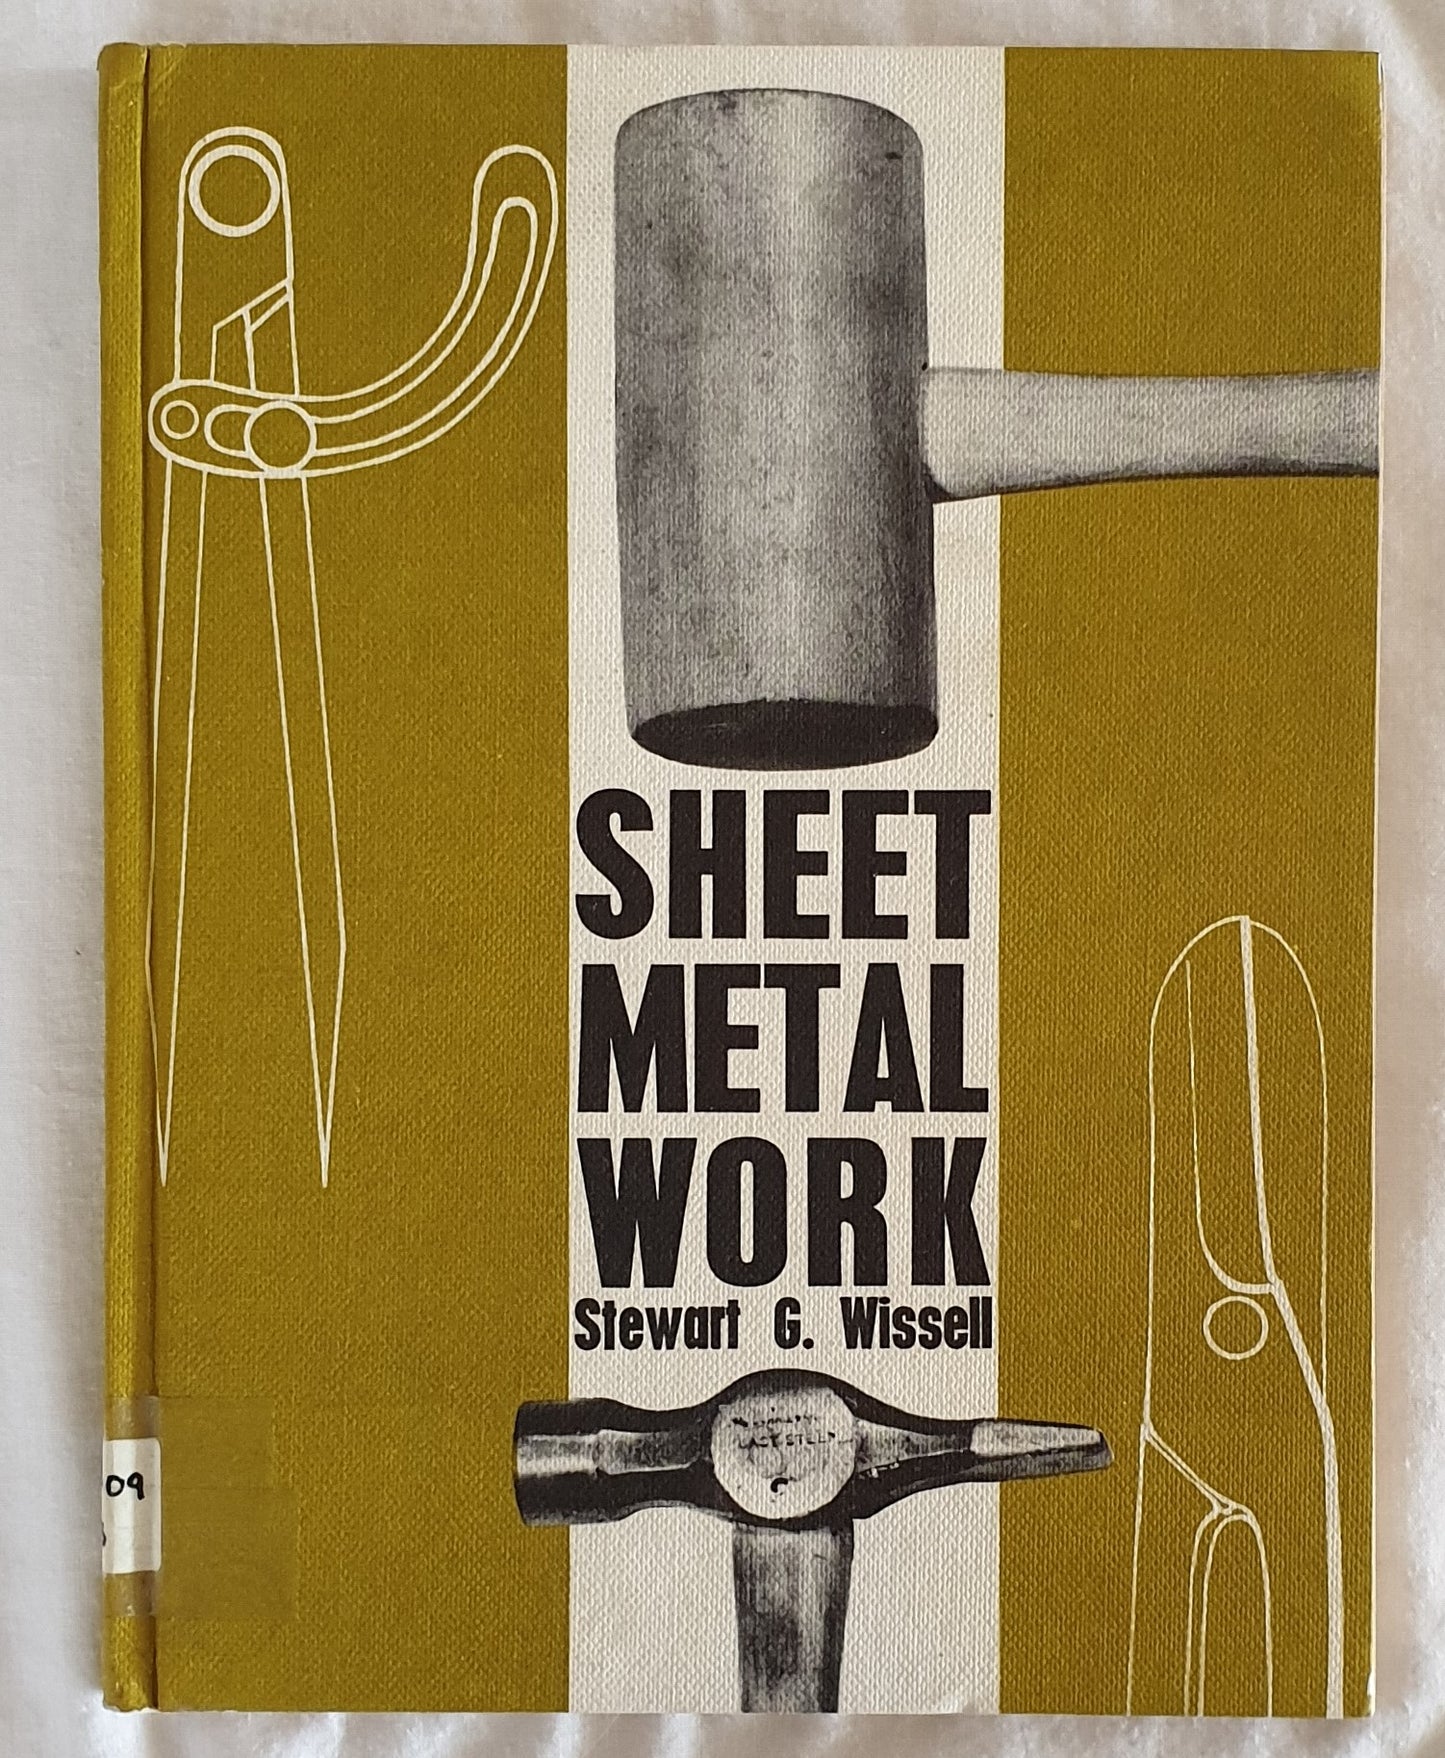 Sheet Metal Work by Stewart G. Wissell